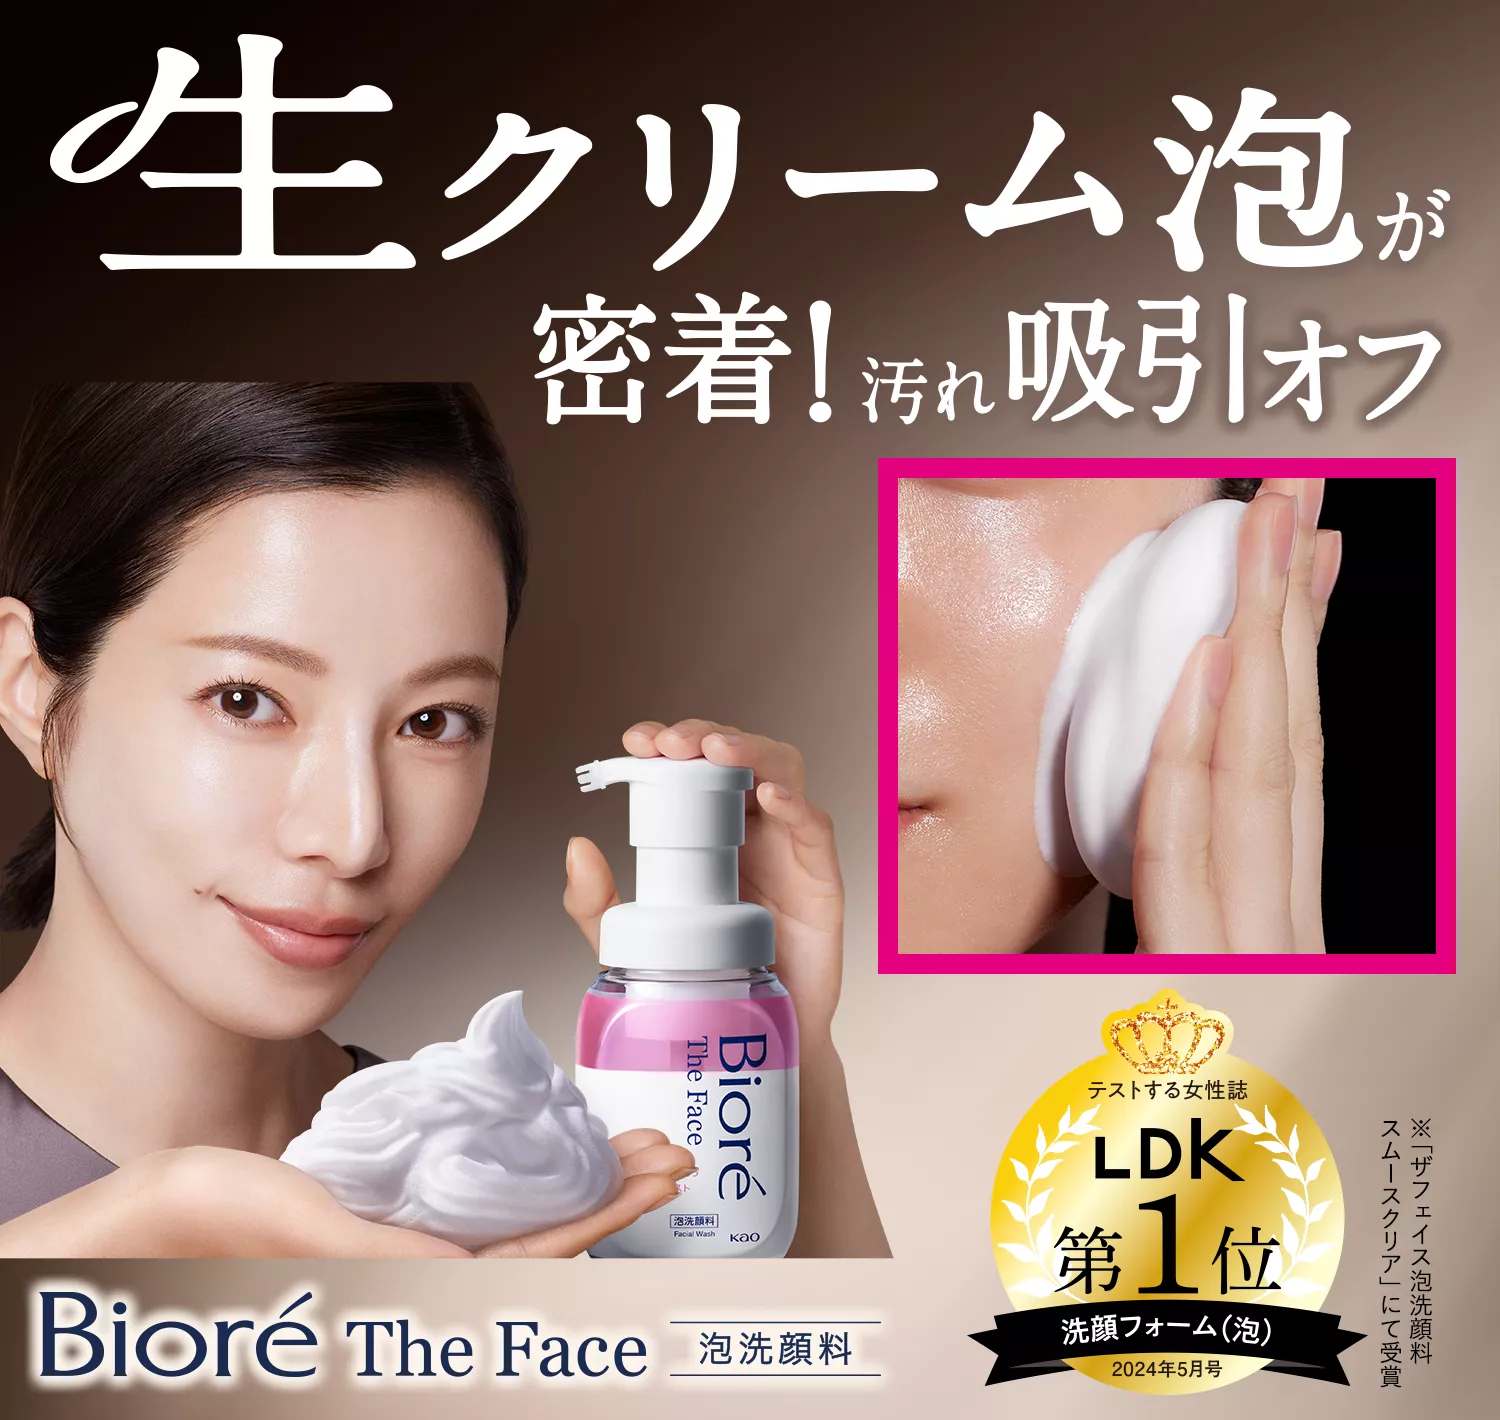 The Face 泡洗顔料 製品ラインナップ ビオレ 花王株式会社